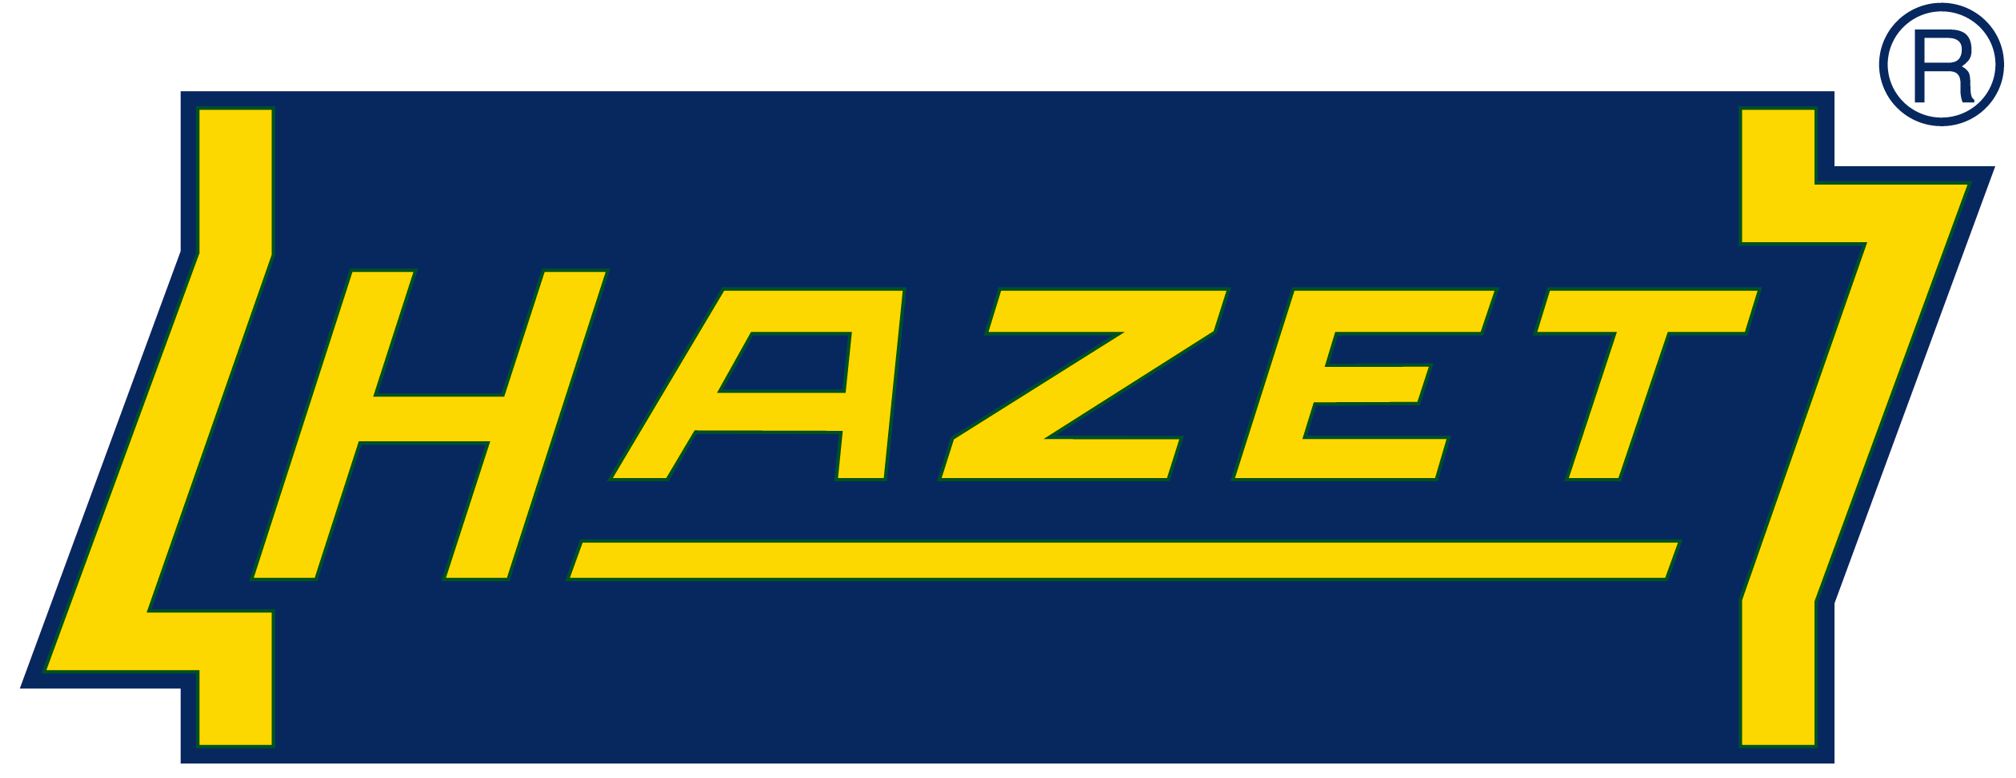 HAZET Logo